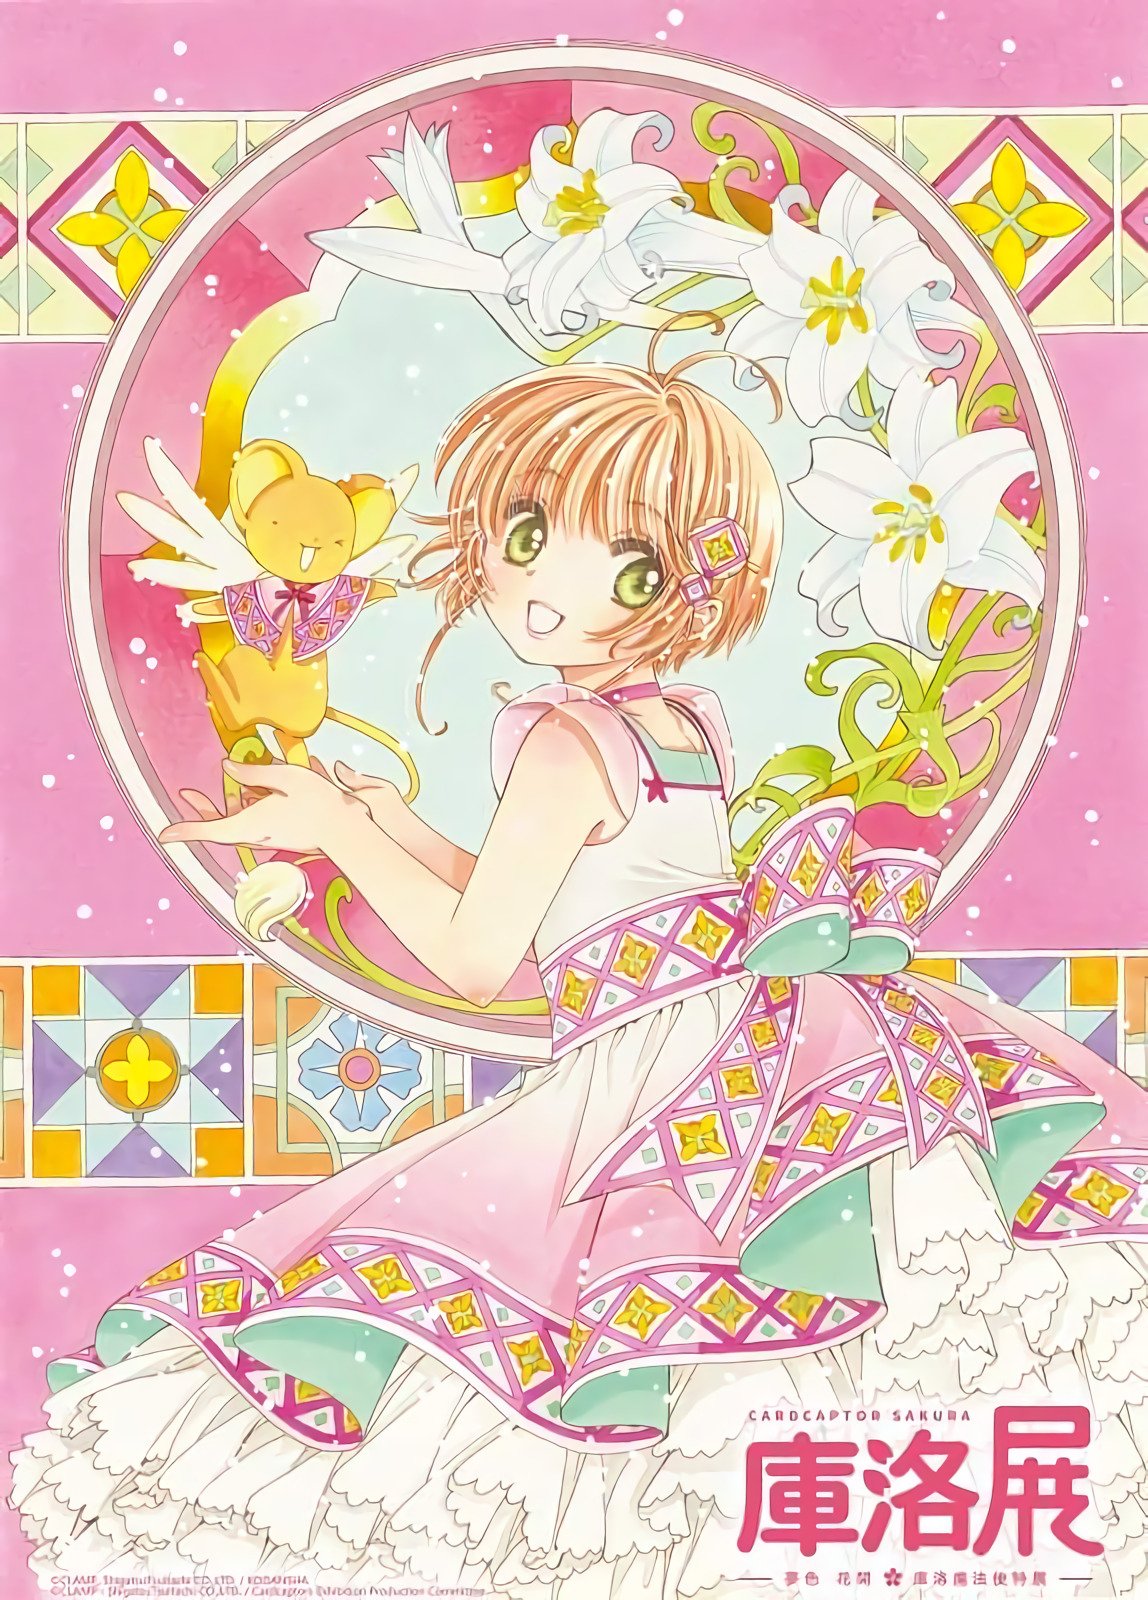 Cardcaptor Sakura et autres mangas [CLAMP] - Page 3 Evh9g_lVkAMH0nK?format=jpg&name=large